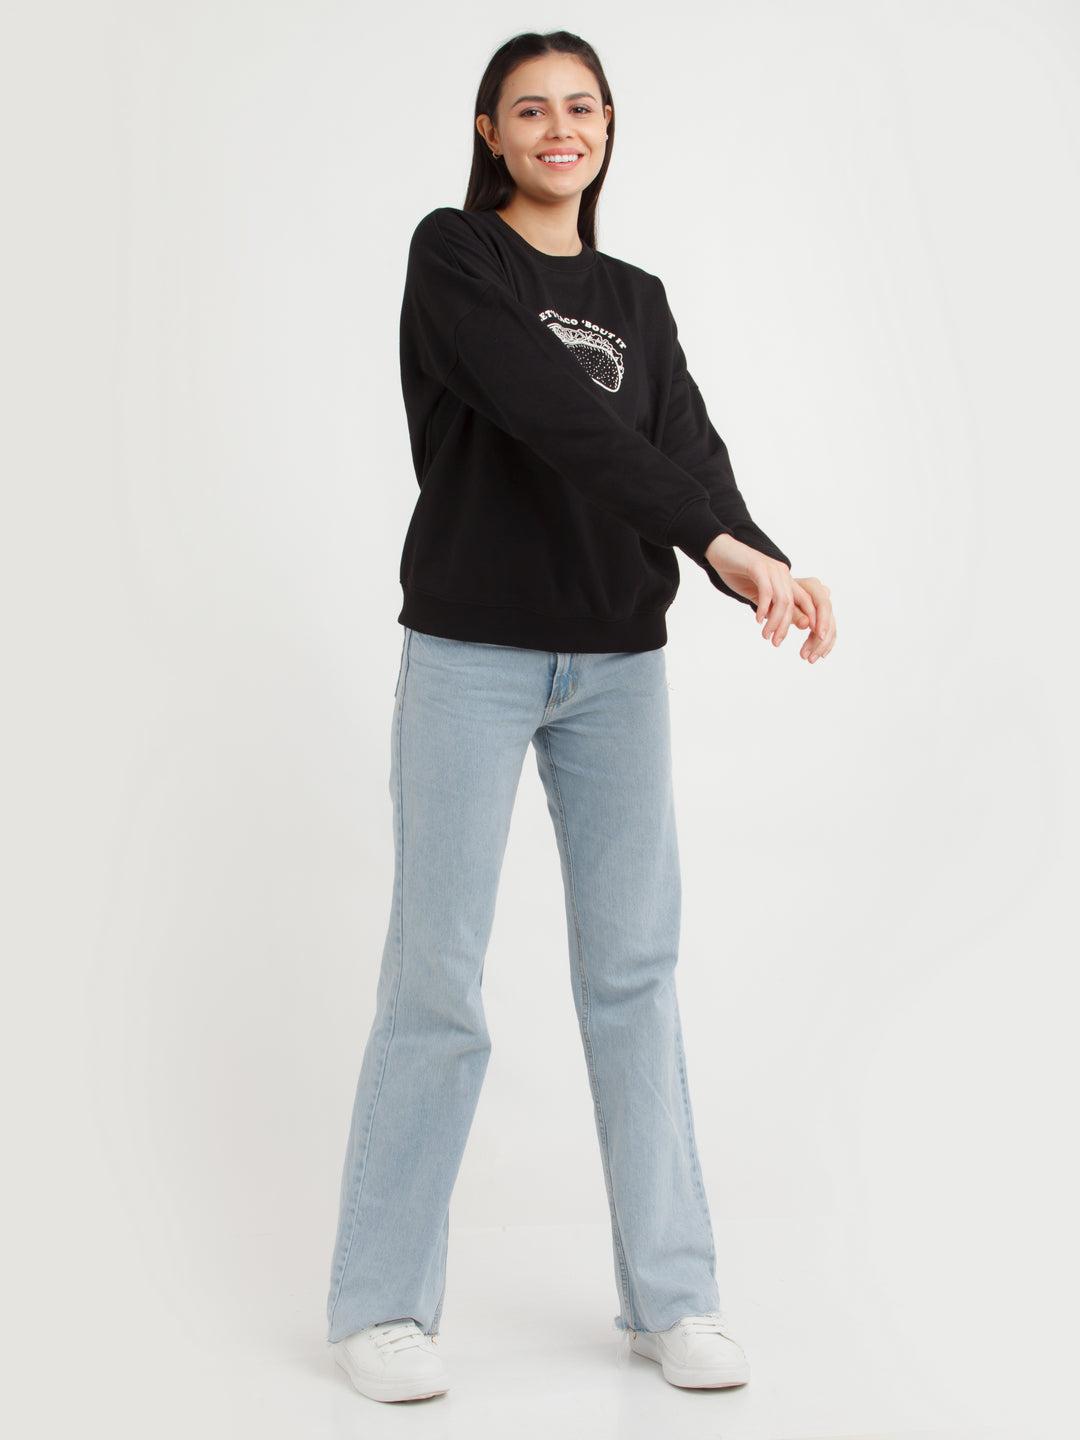 black-printed-sweatshirt-for-women